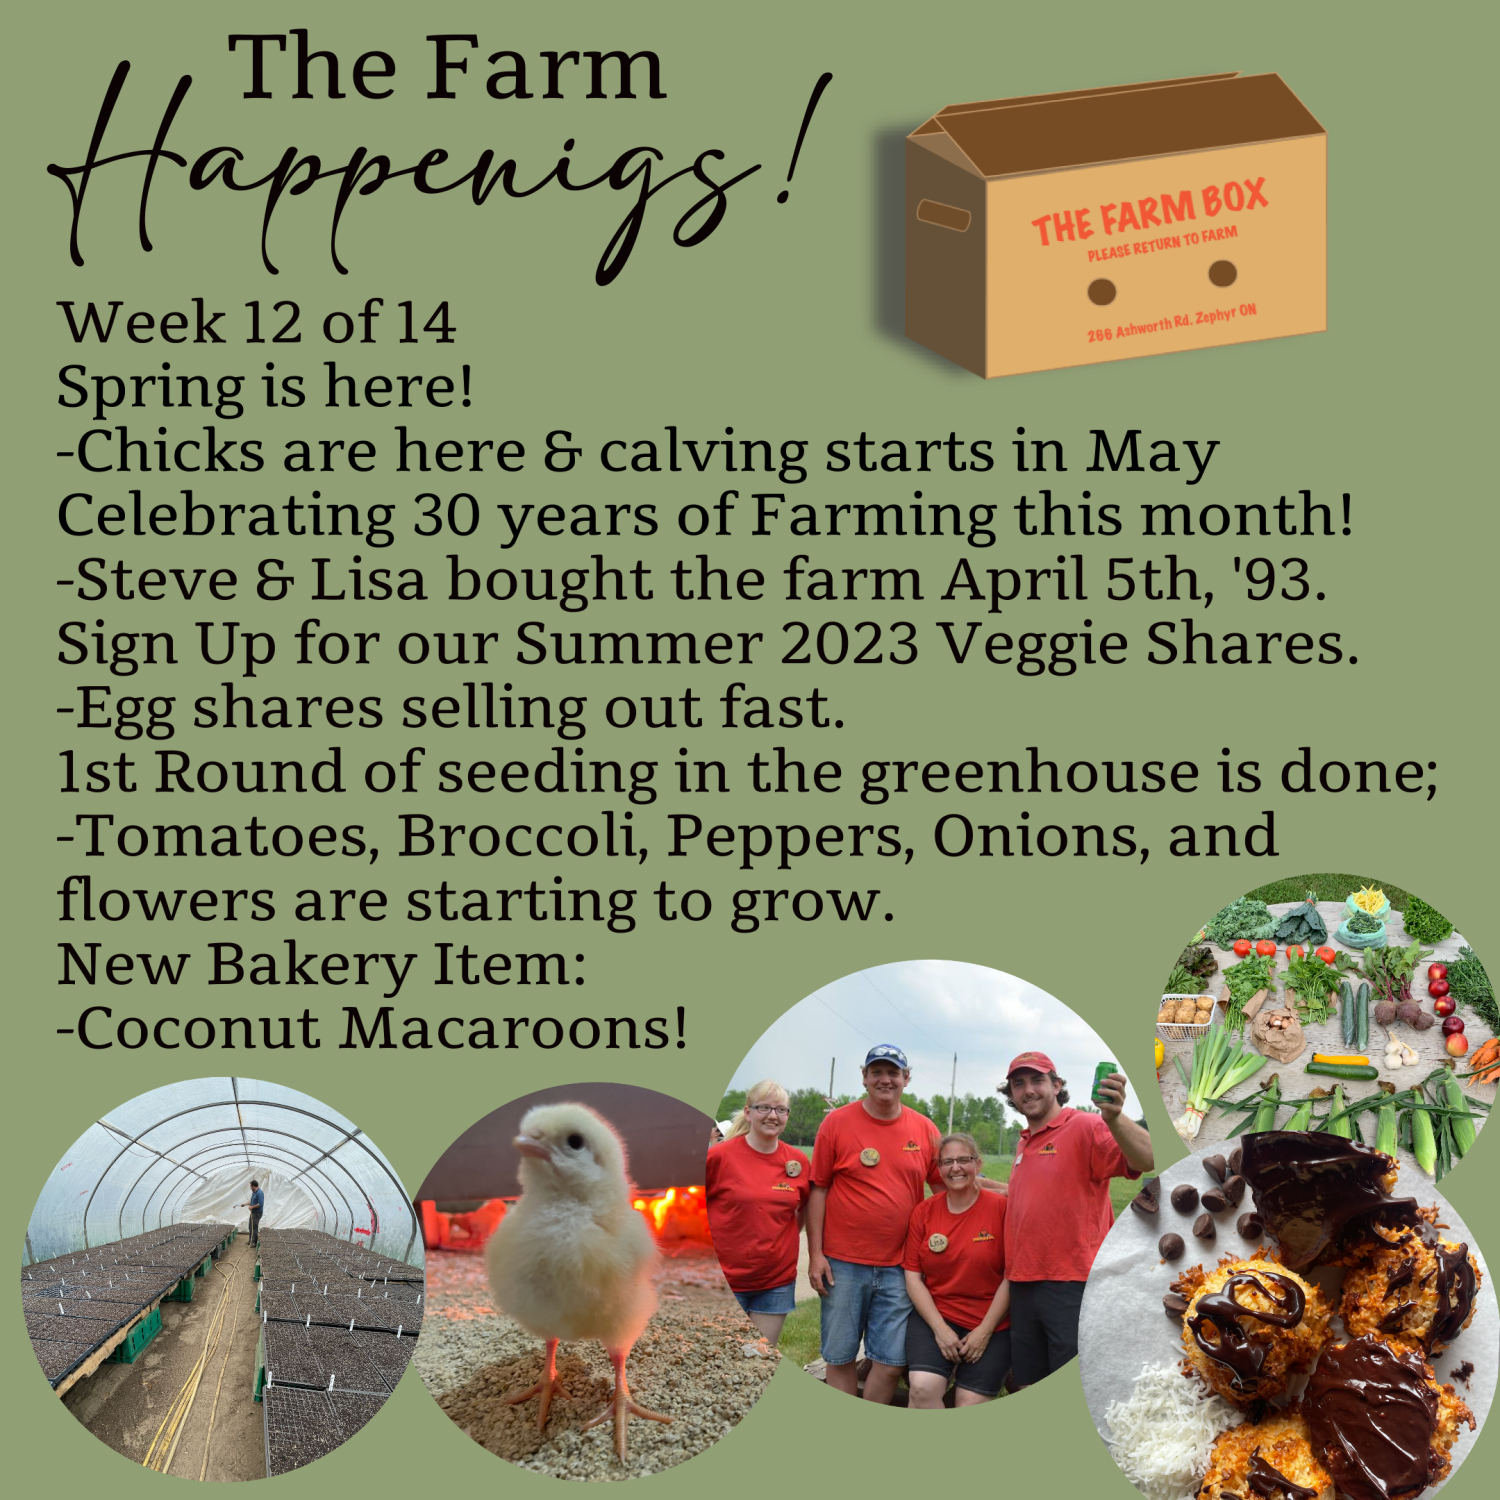 Previous Happening: "The Farm Box"-Coopers CSA Farm Farm Happenings Winter/Spring Week 12